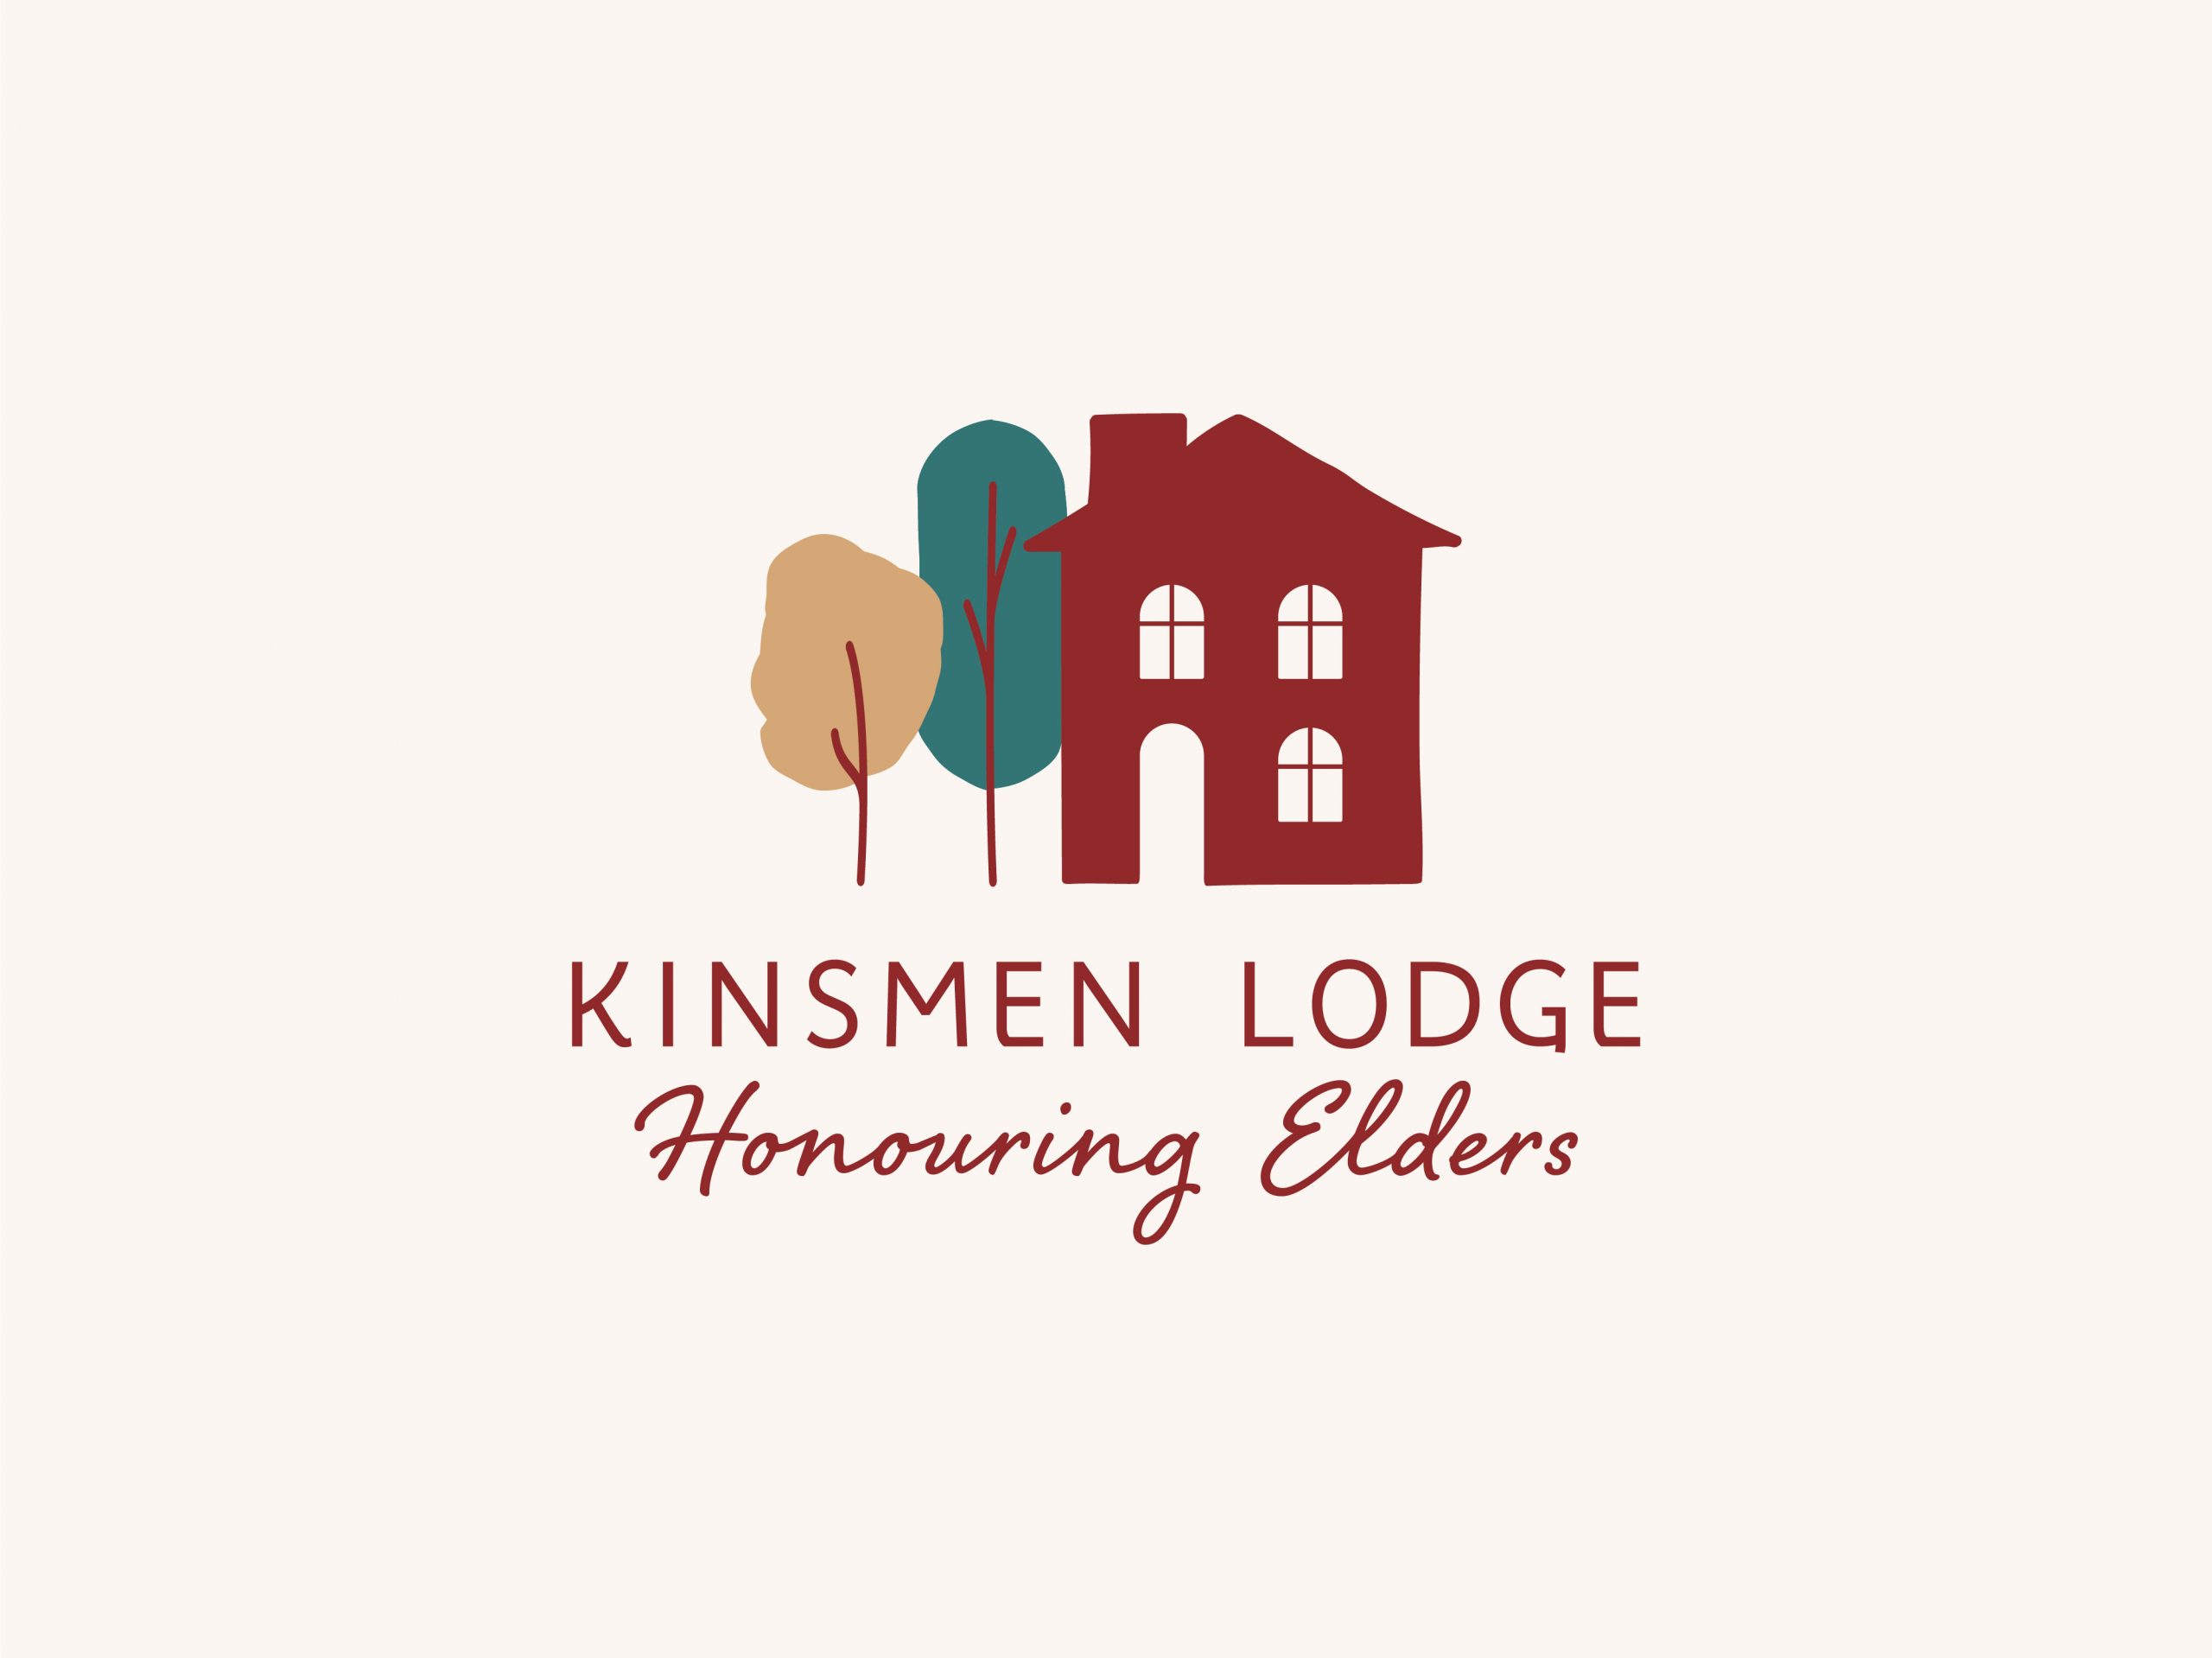 Kinsmen lodge logo design - White Canvas Design